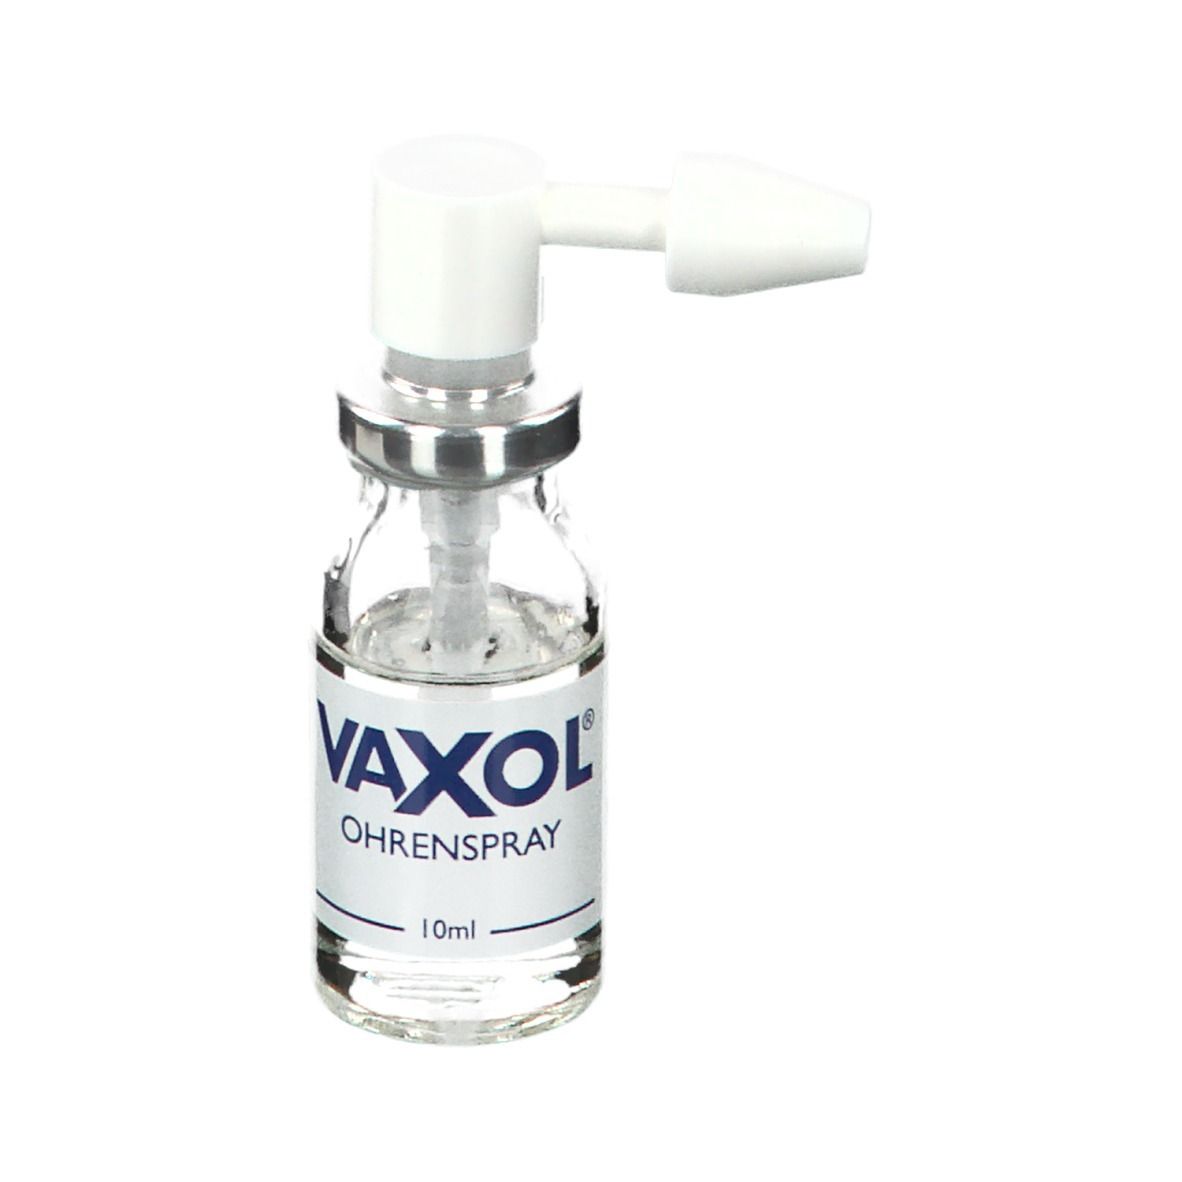 Vaxol® earspray